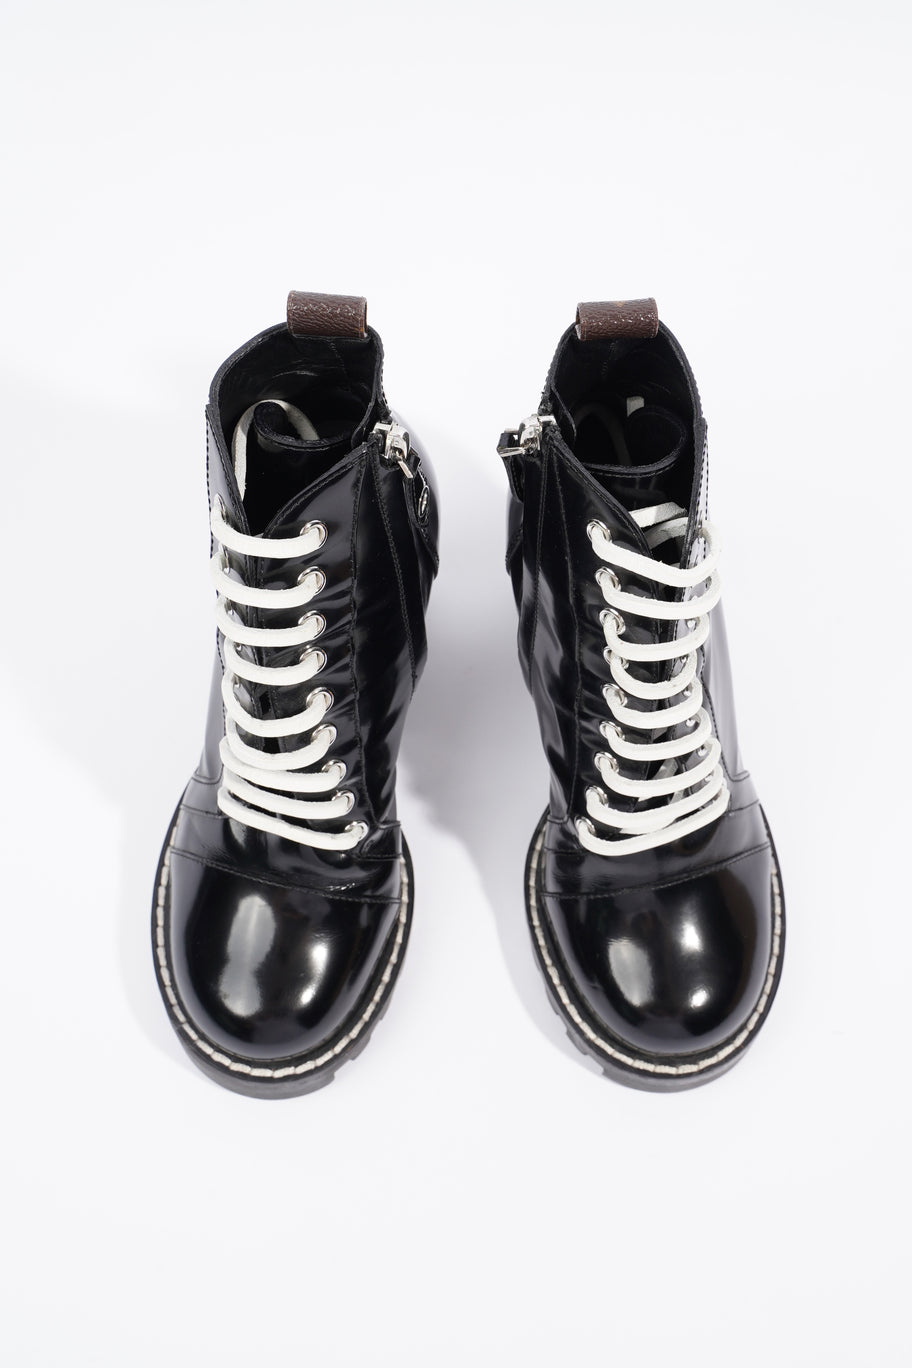 Louis Vuitton Star Trail Ankle Boot Patent Black EU 36 / UK 3 Image 8